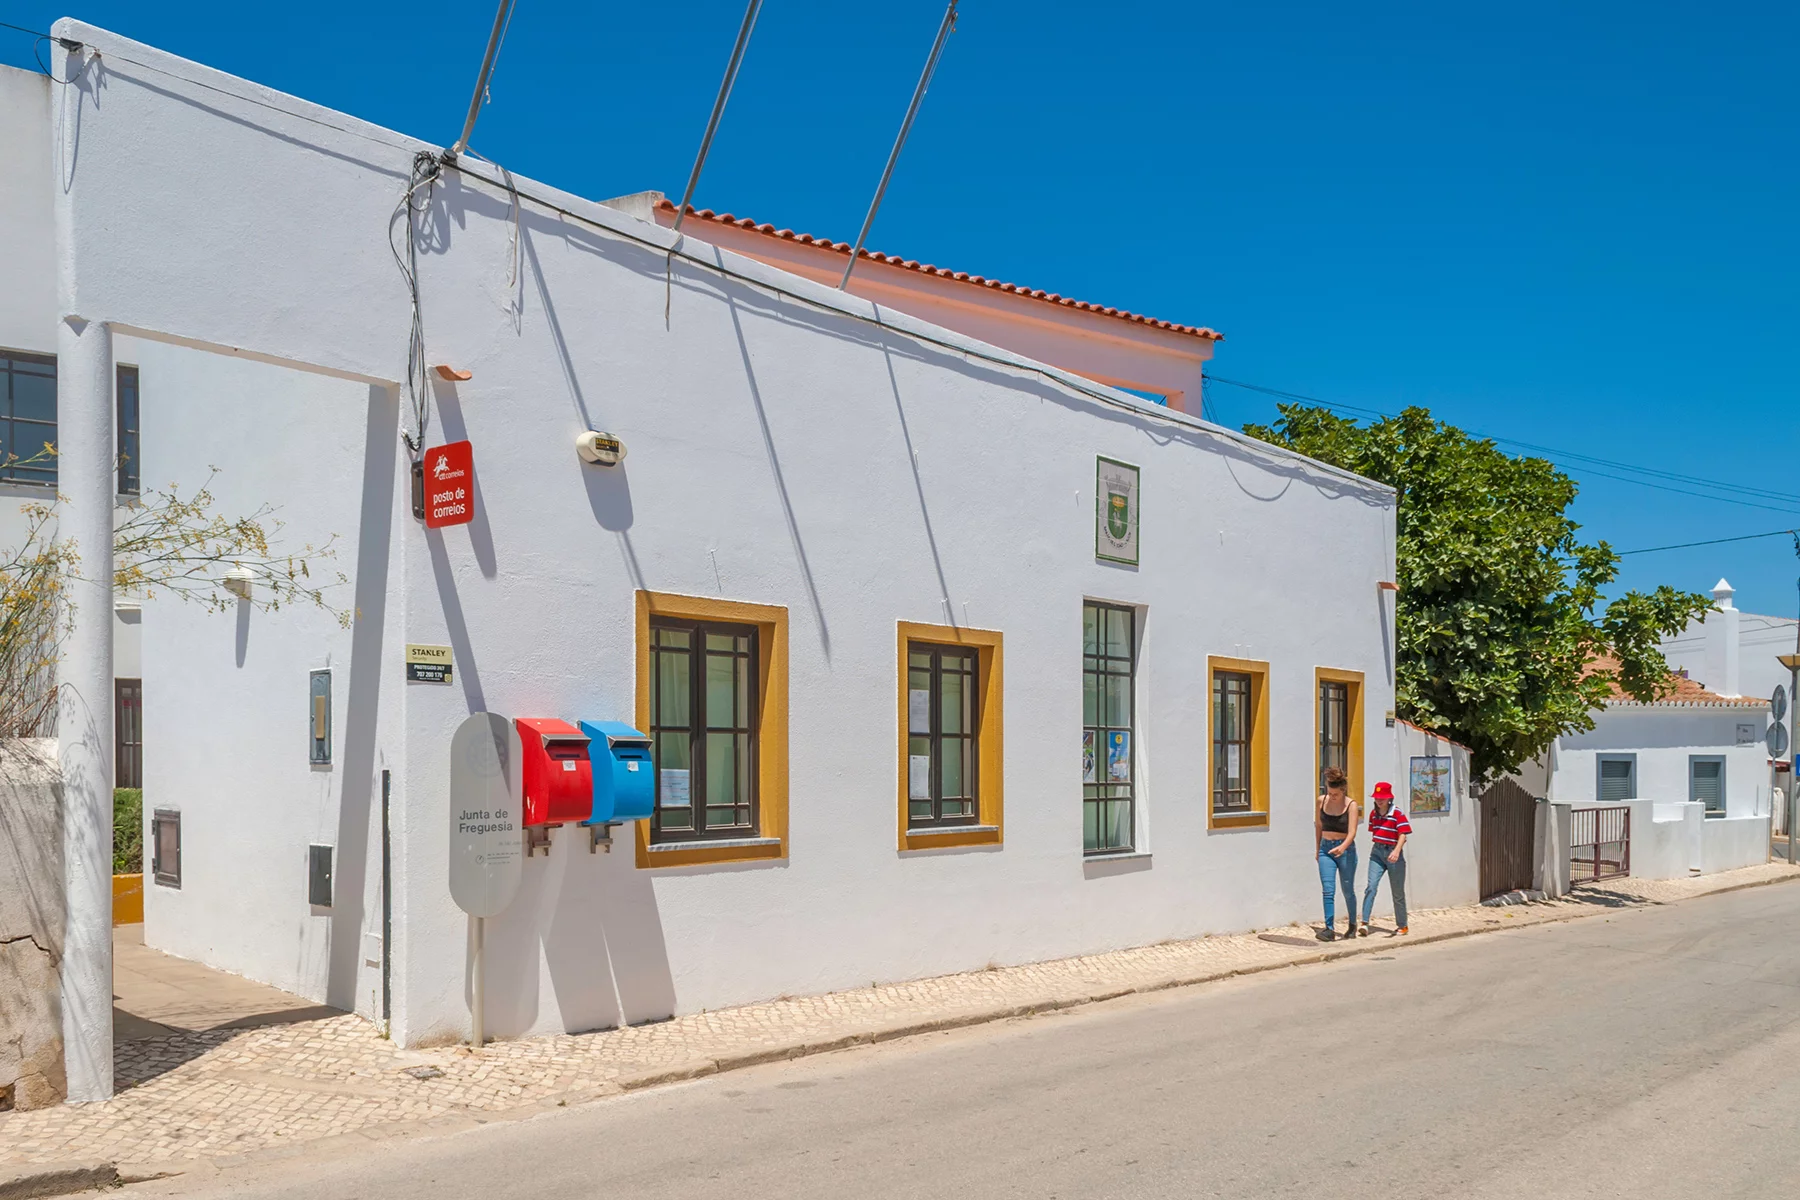 Portuguese postal services